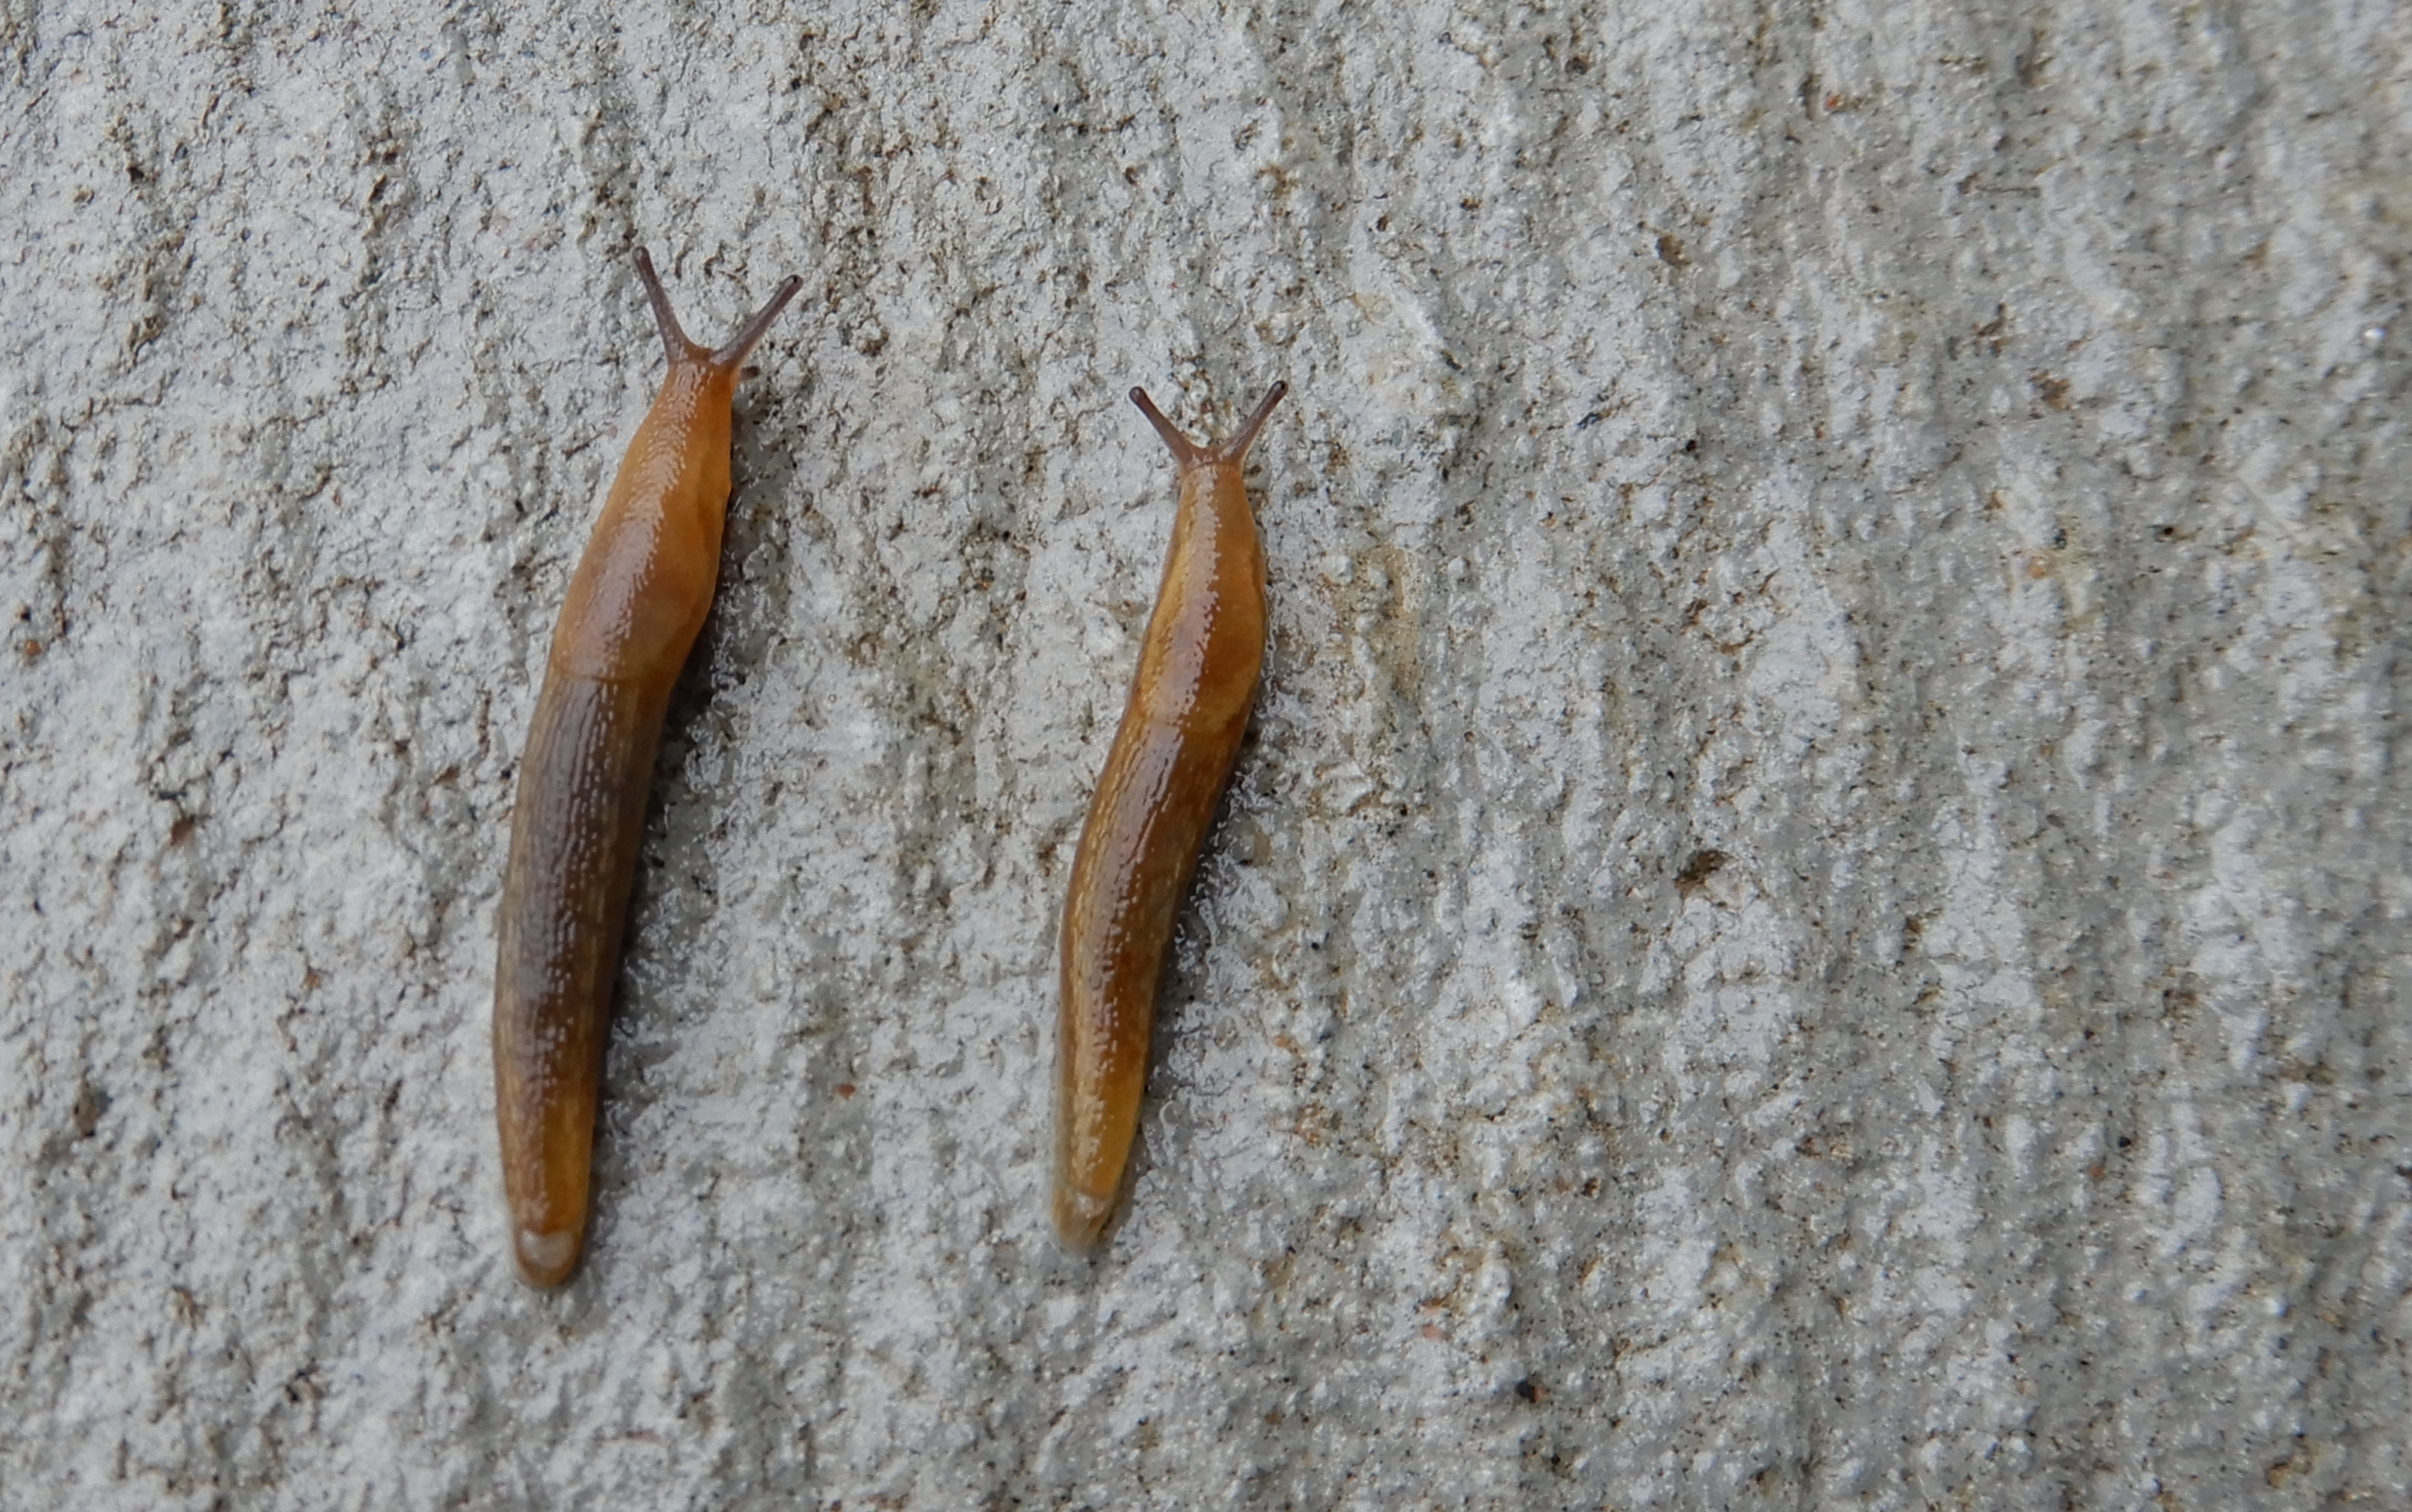 Slug race on a concrete patio slab.